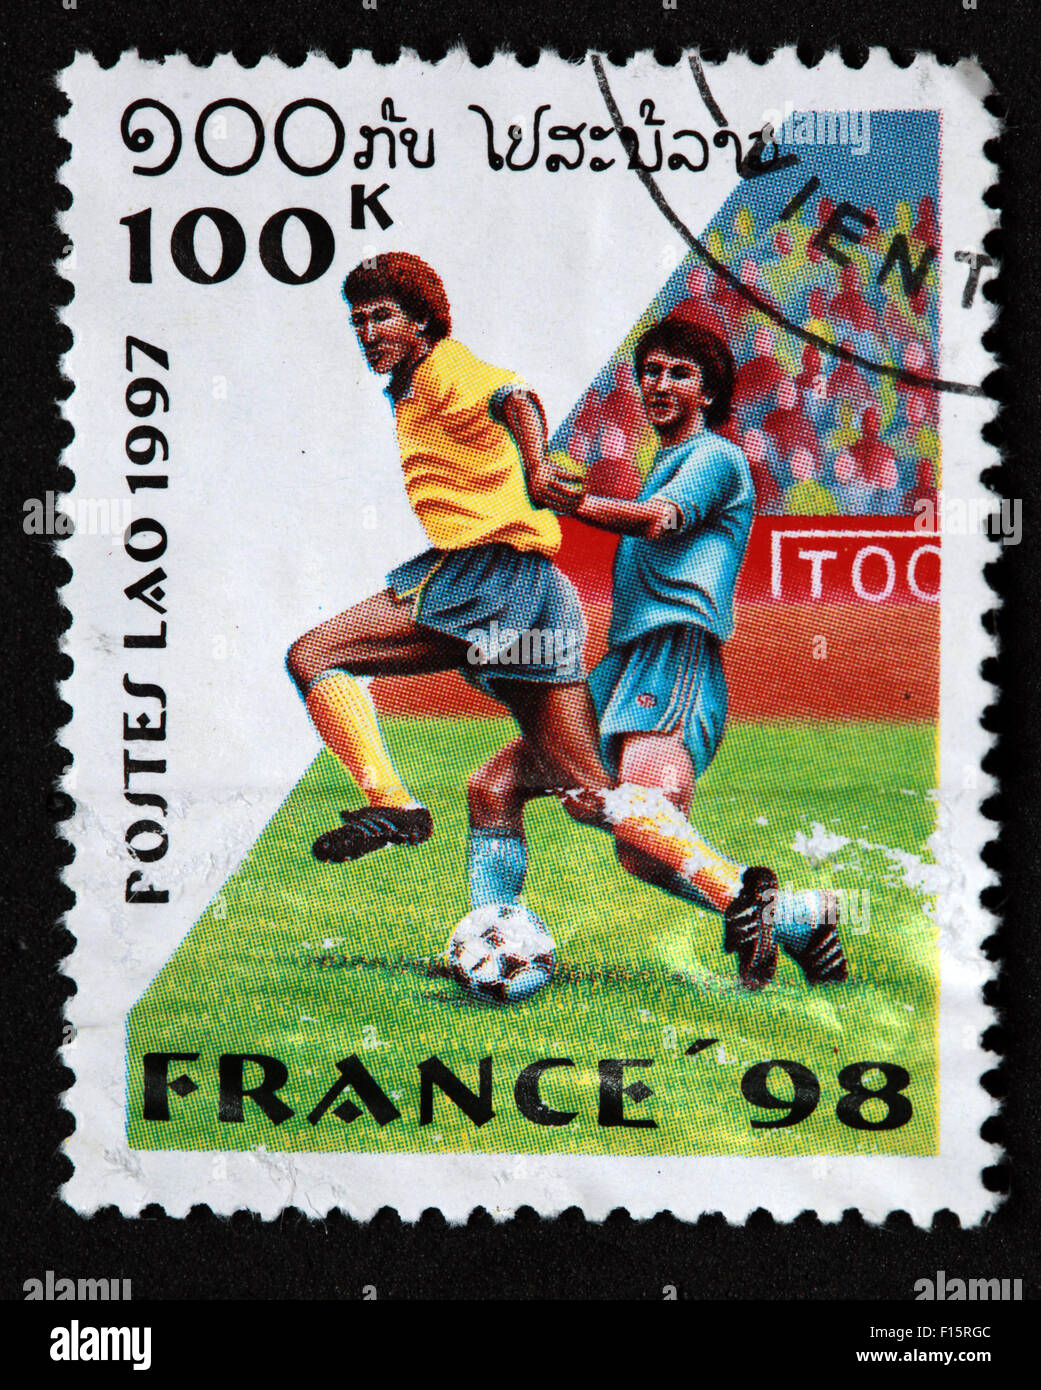 Postes Laos Laos 100K Frankreich 1998 98 Fußball Deportes World Cup Worldcup Sport Stempel Stockfoto